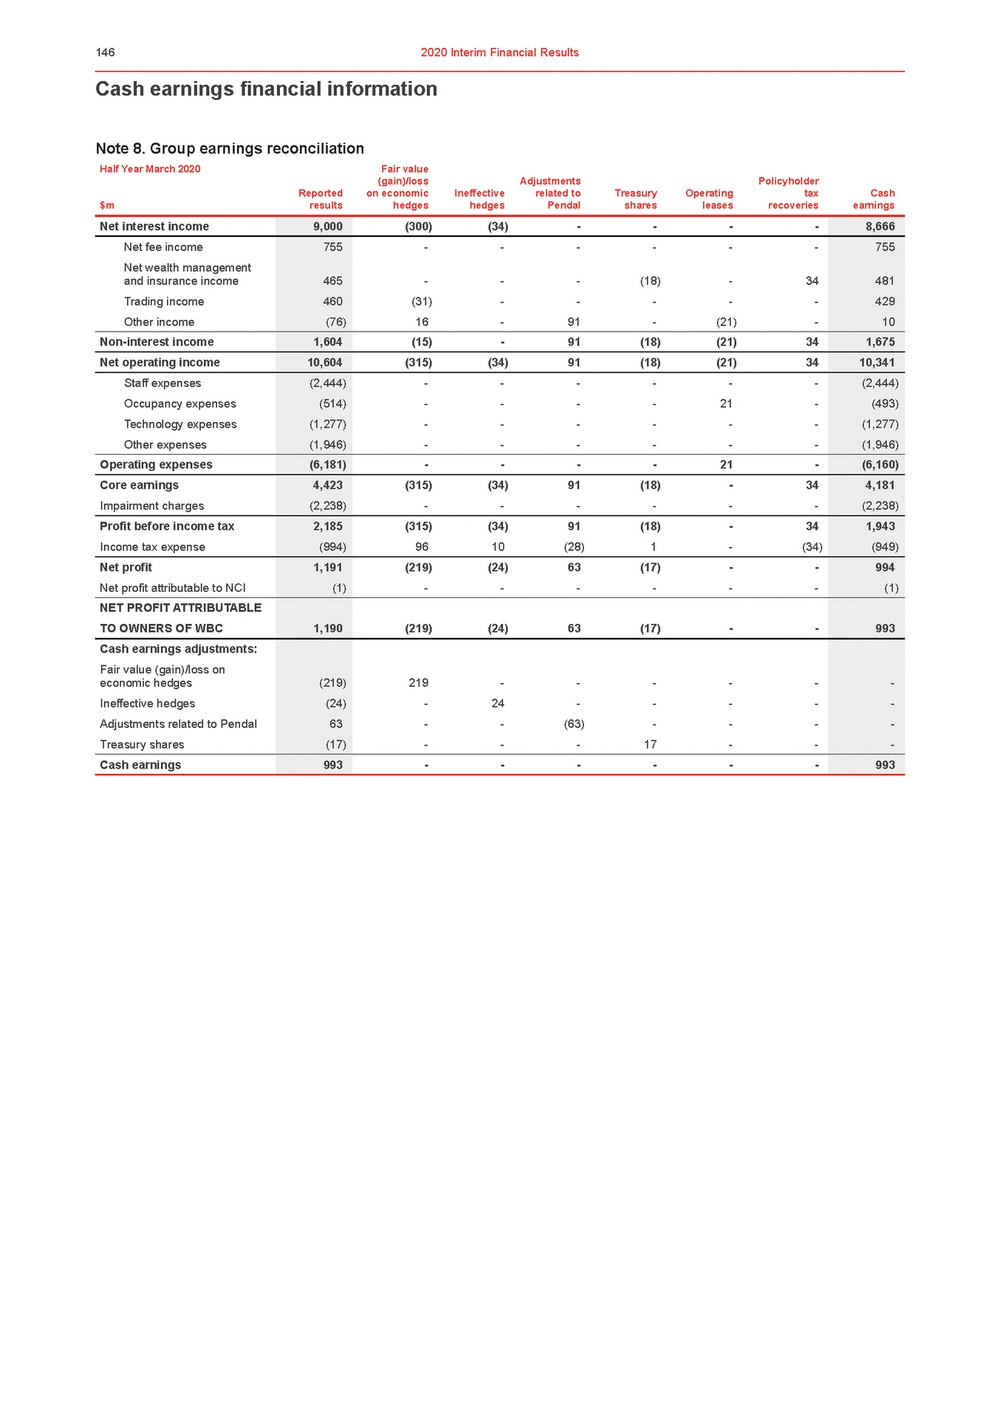 11676-3-ex1_westpac 2020 interim financial results announcement_page_151.jpg